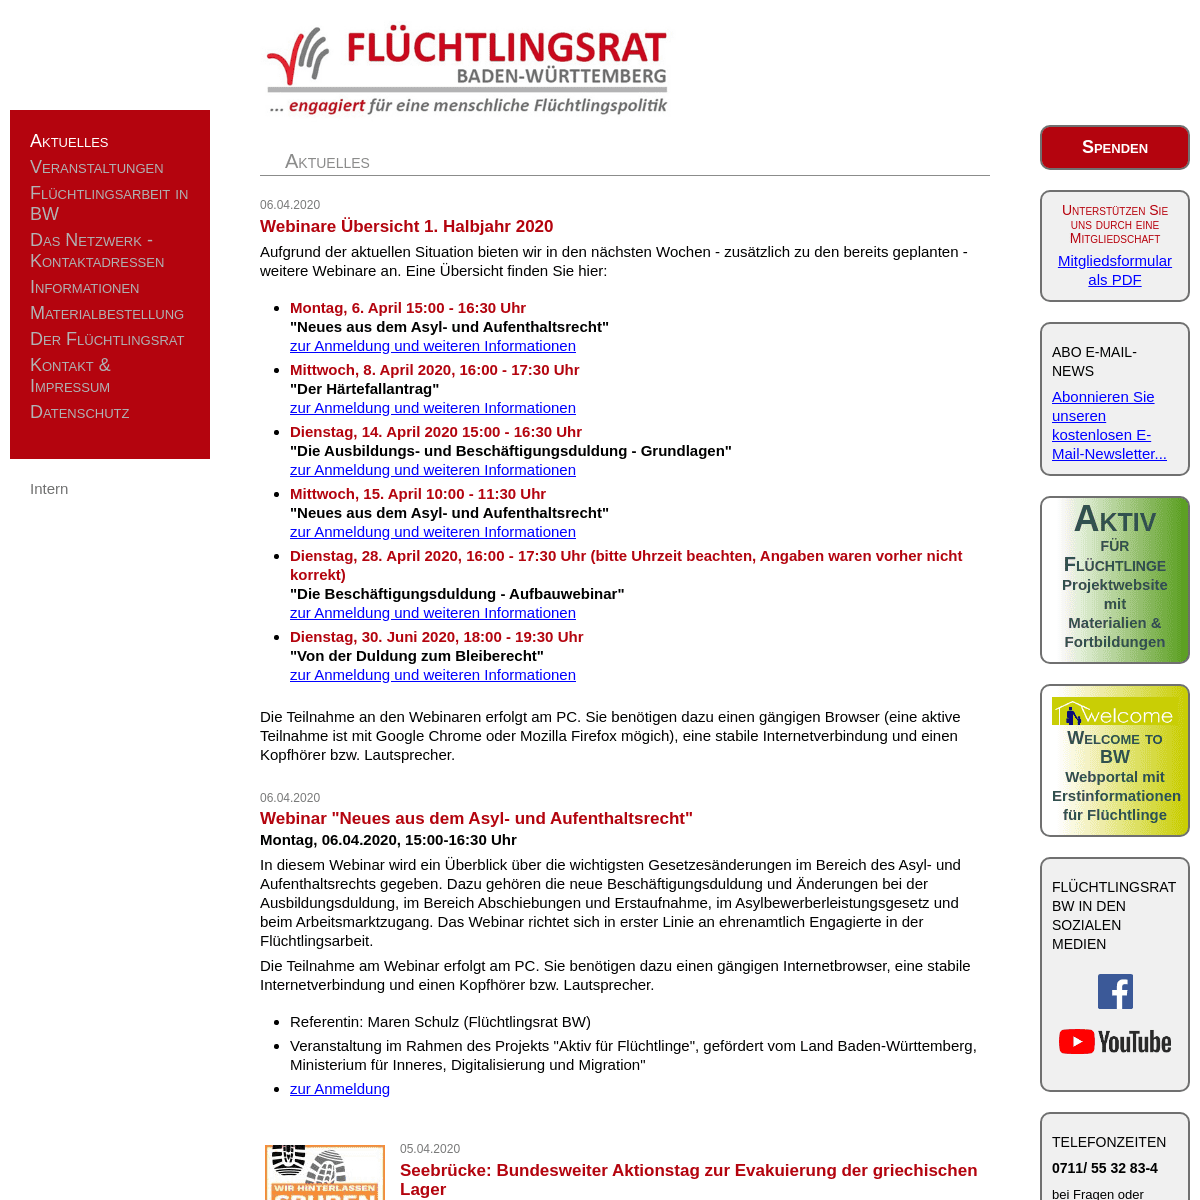 A complete backup of fluechtlingsrat-bw.de